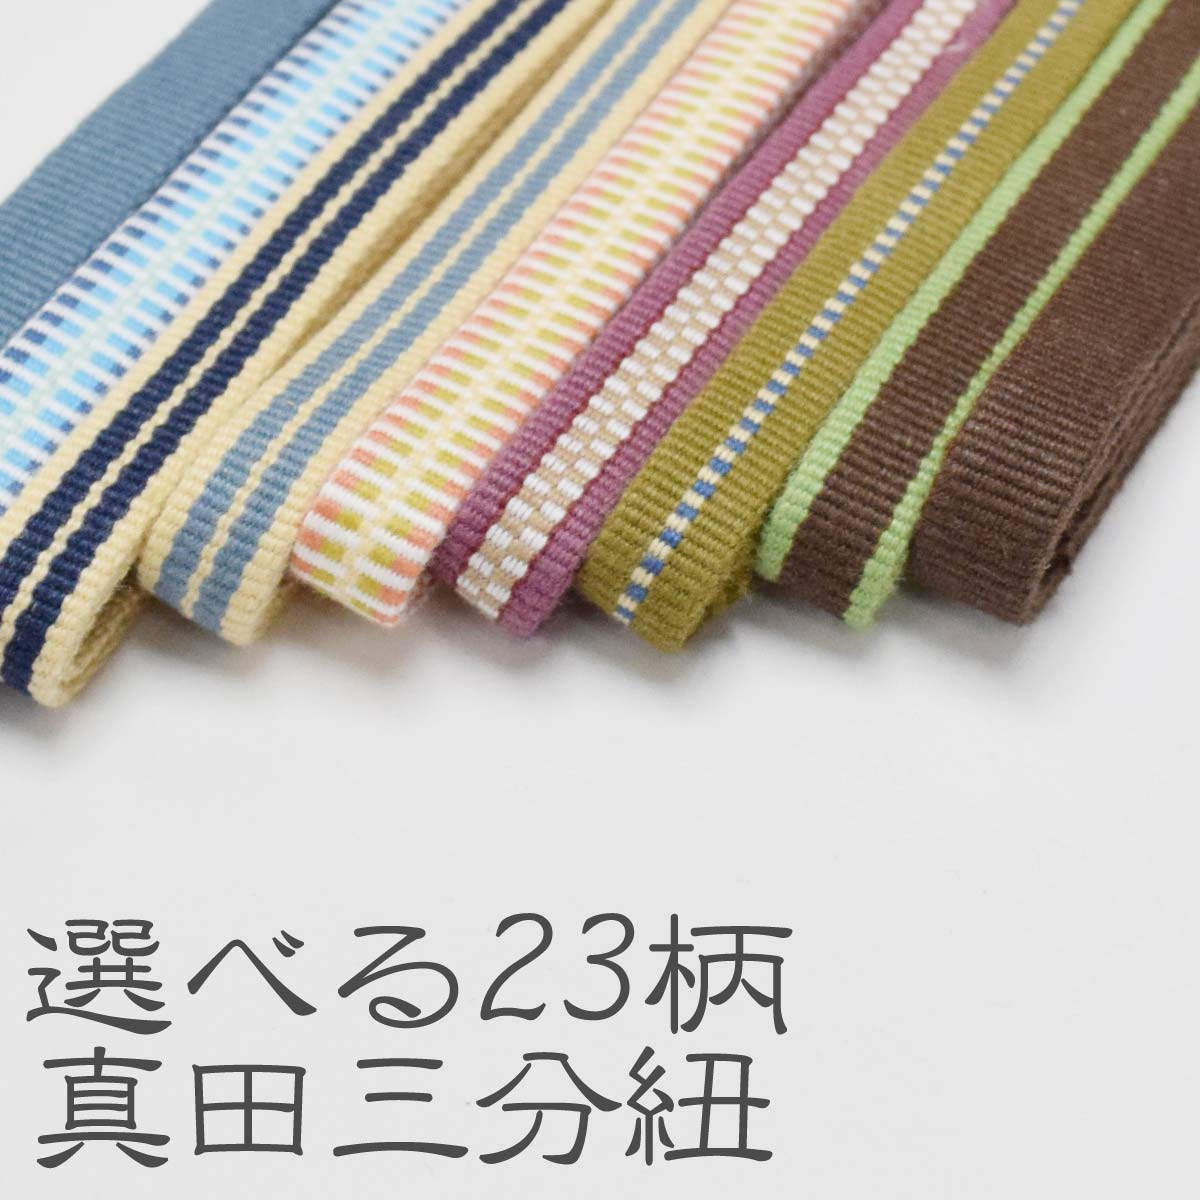 絹 加賀 袋織 三分紐 真田紐 単品売り １本売り 帯締め 三部紐 帯〆 s01